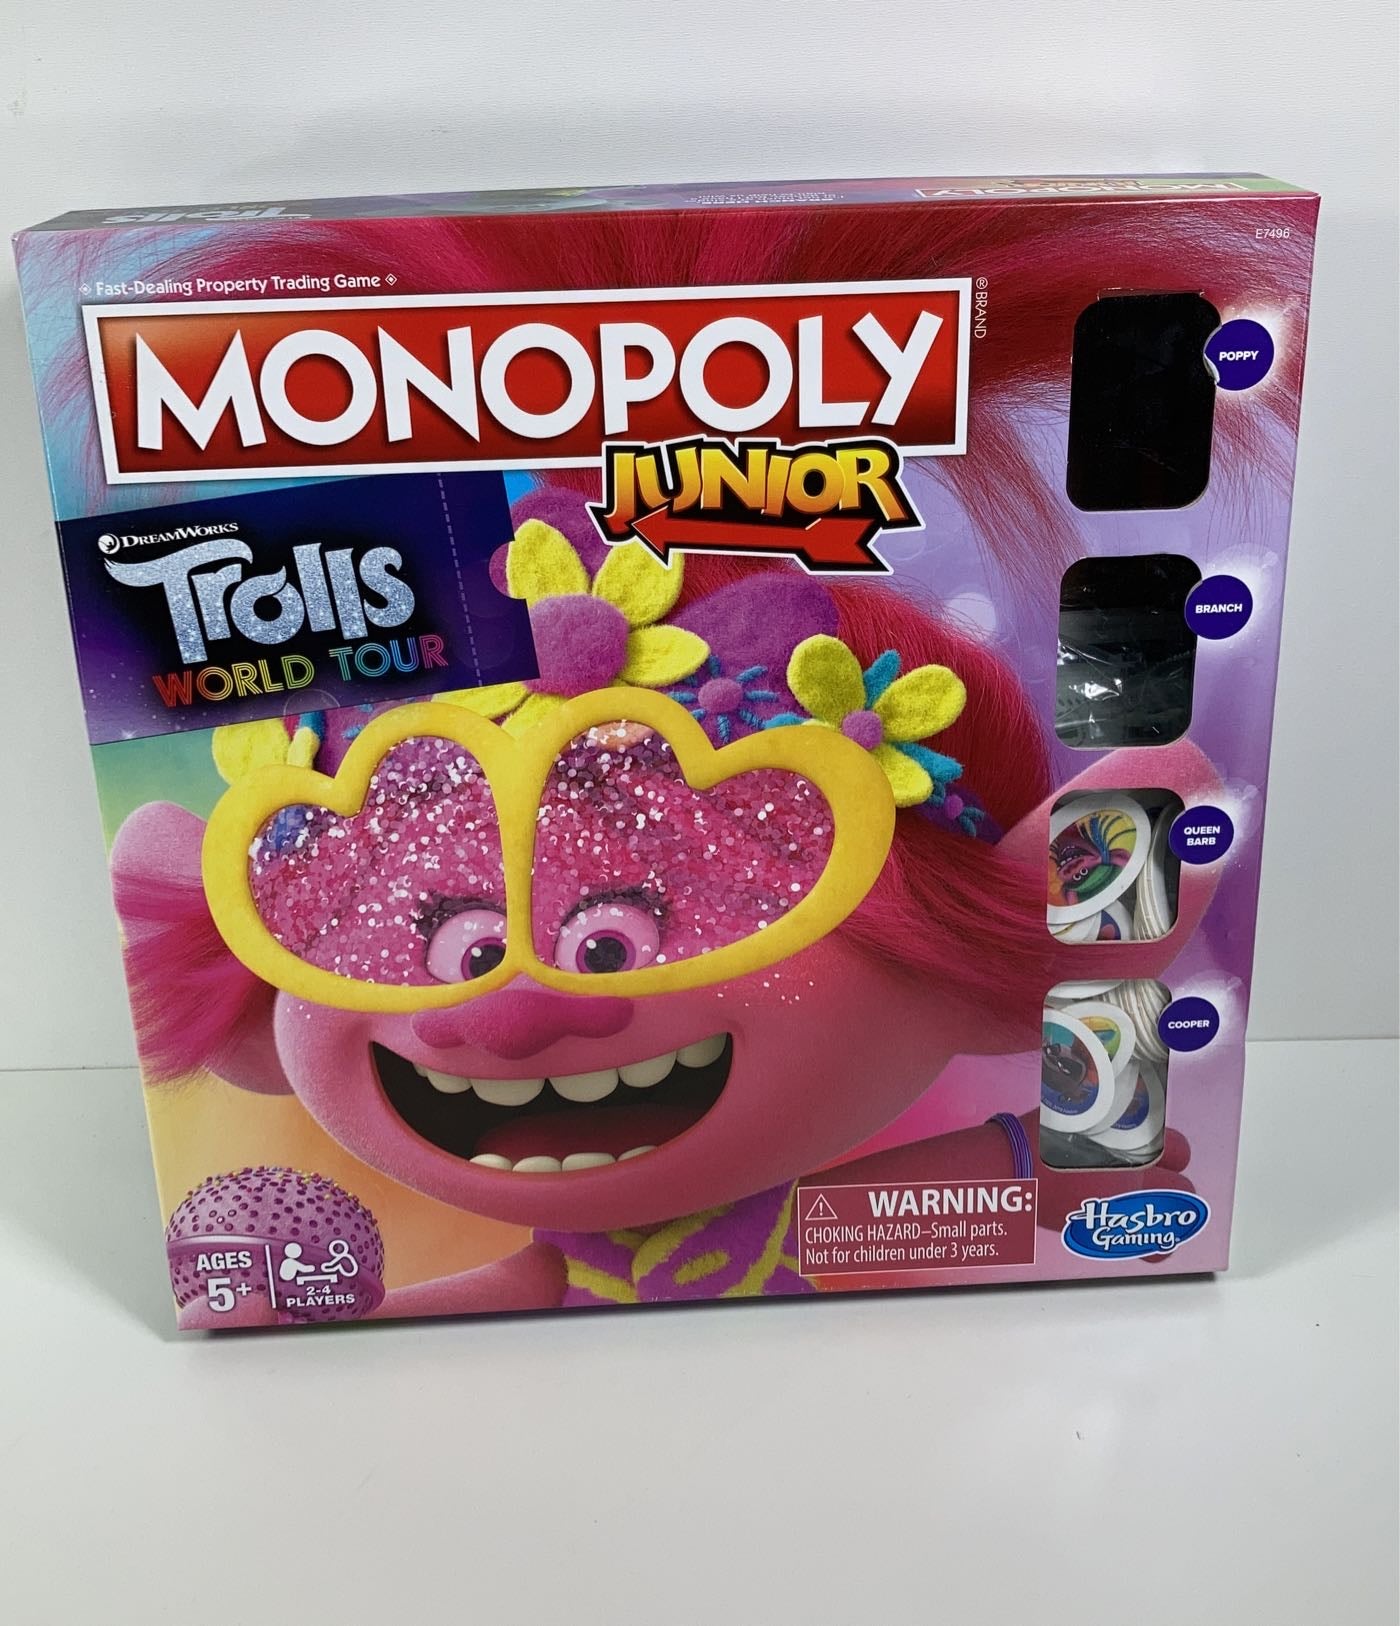 Monopoly World Tour Edition